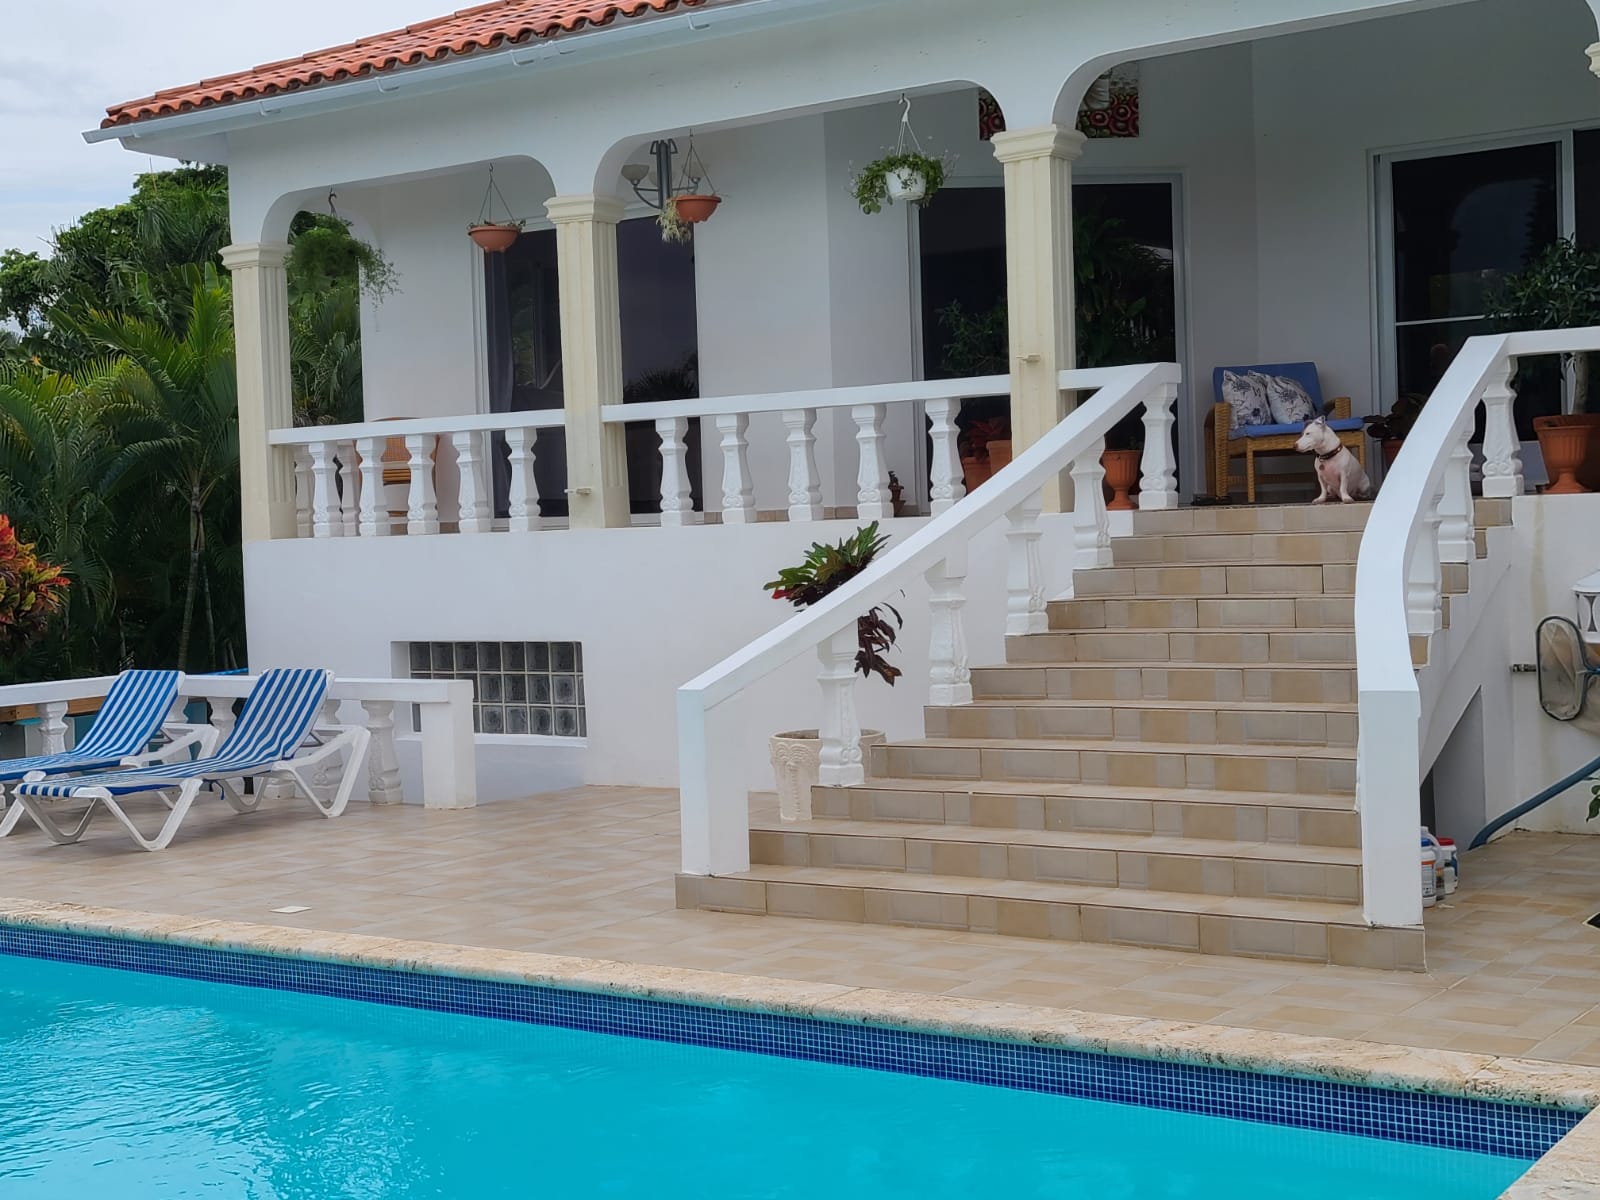 Spacious Villa Overlooking The Ocean In Prestigious Residential